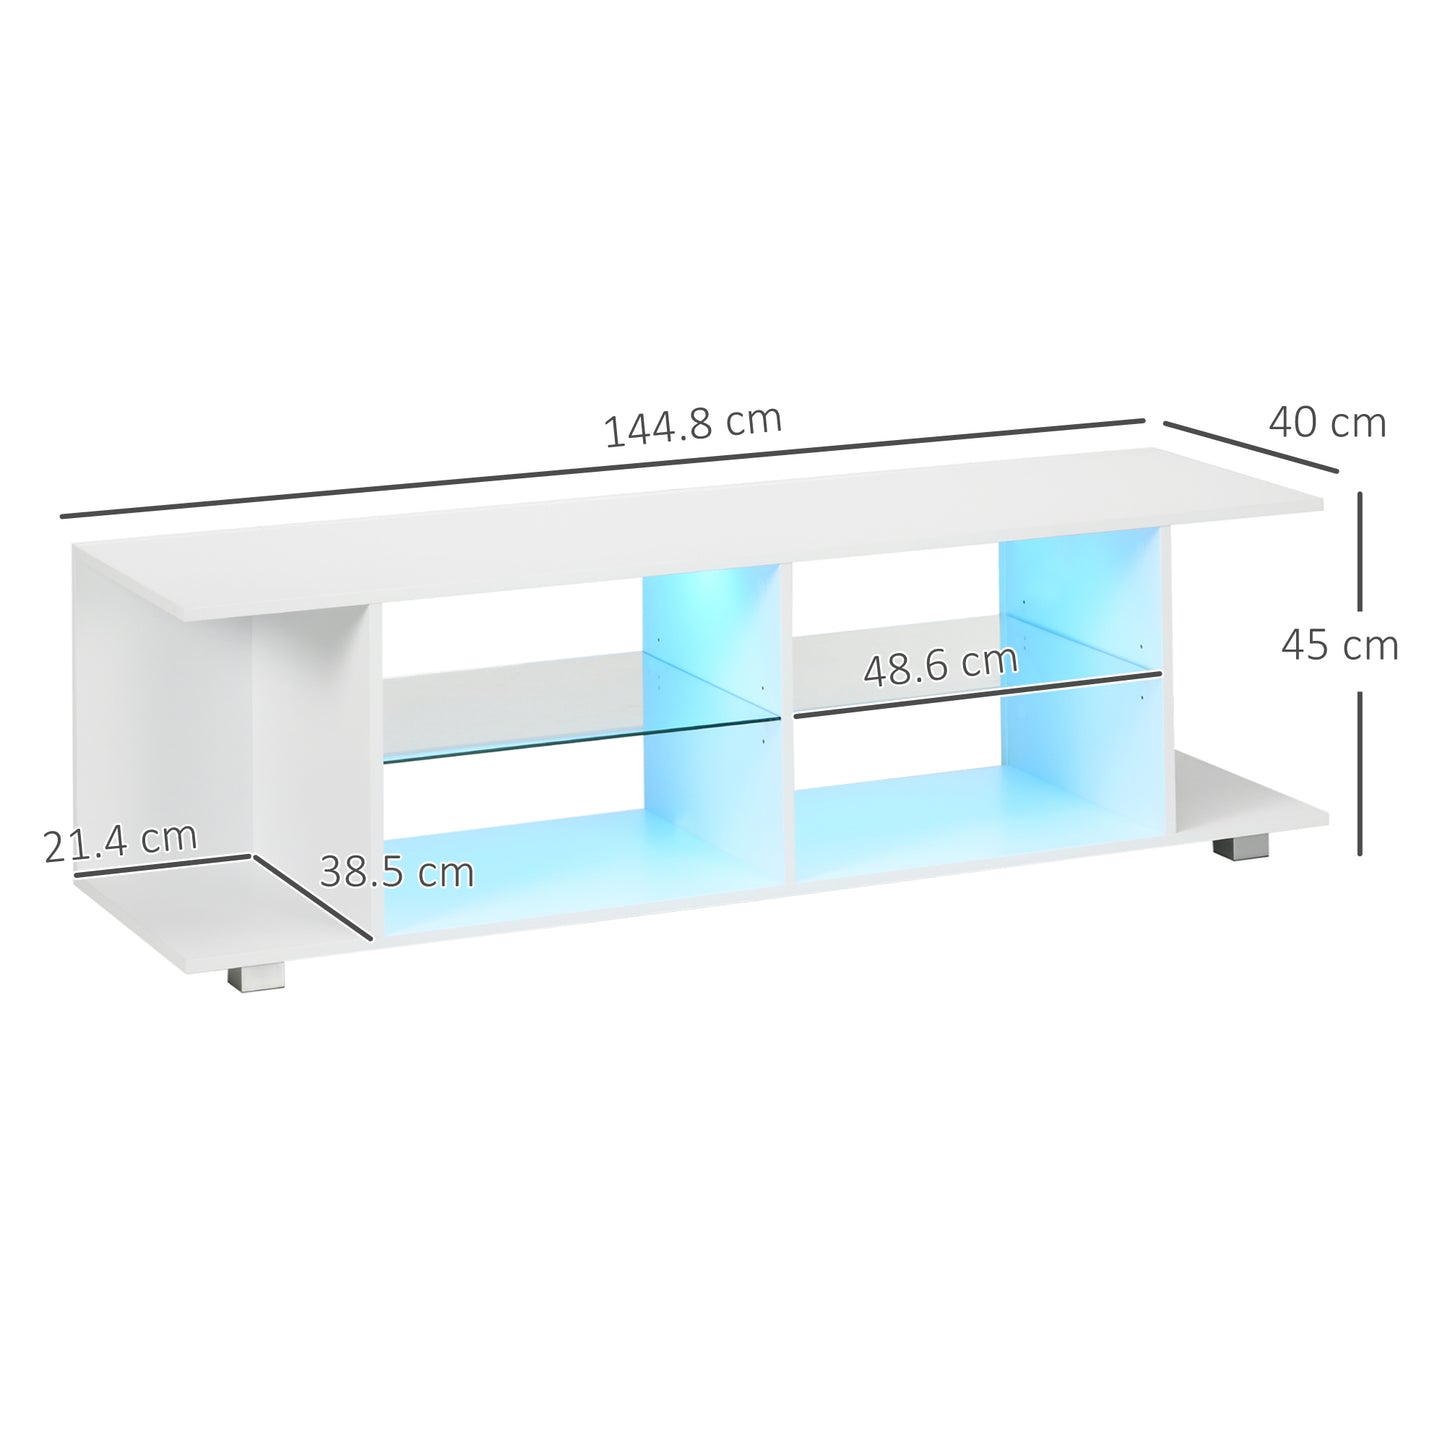 HOMCOM TV Stand 145cm Modern TV Unit with Glass Shelves RGB LED Light for 32 - 60 inch 4k TV White